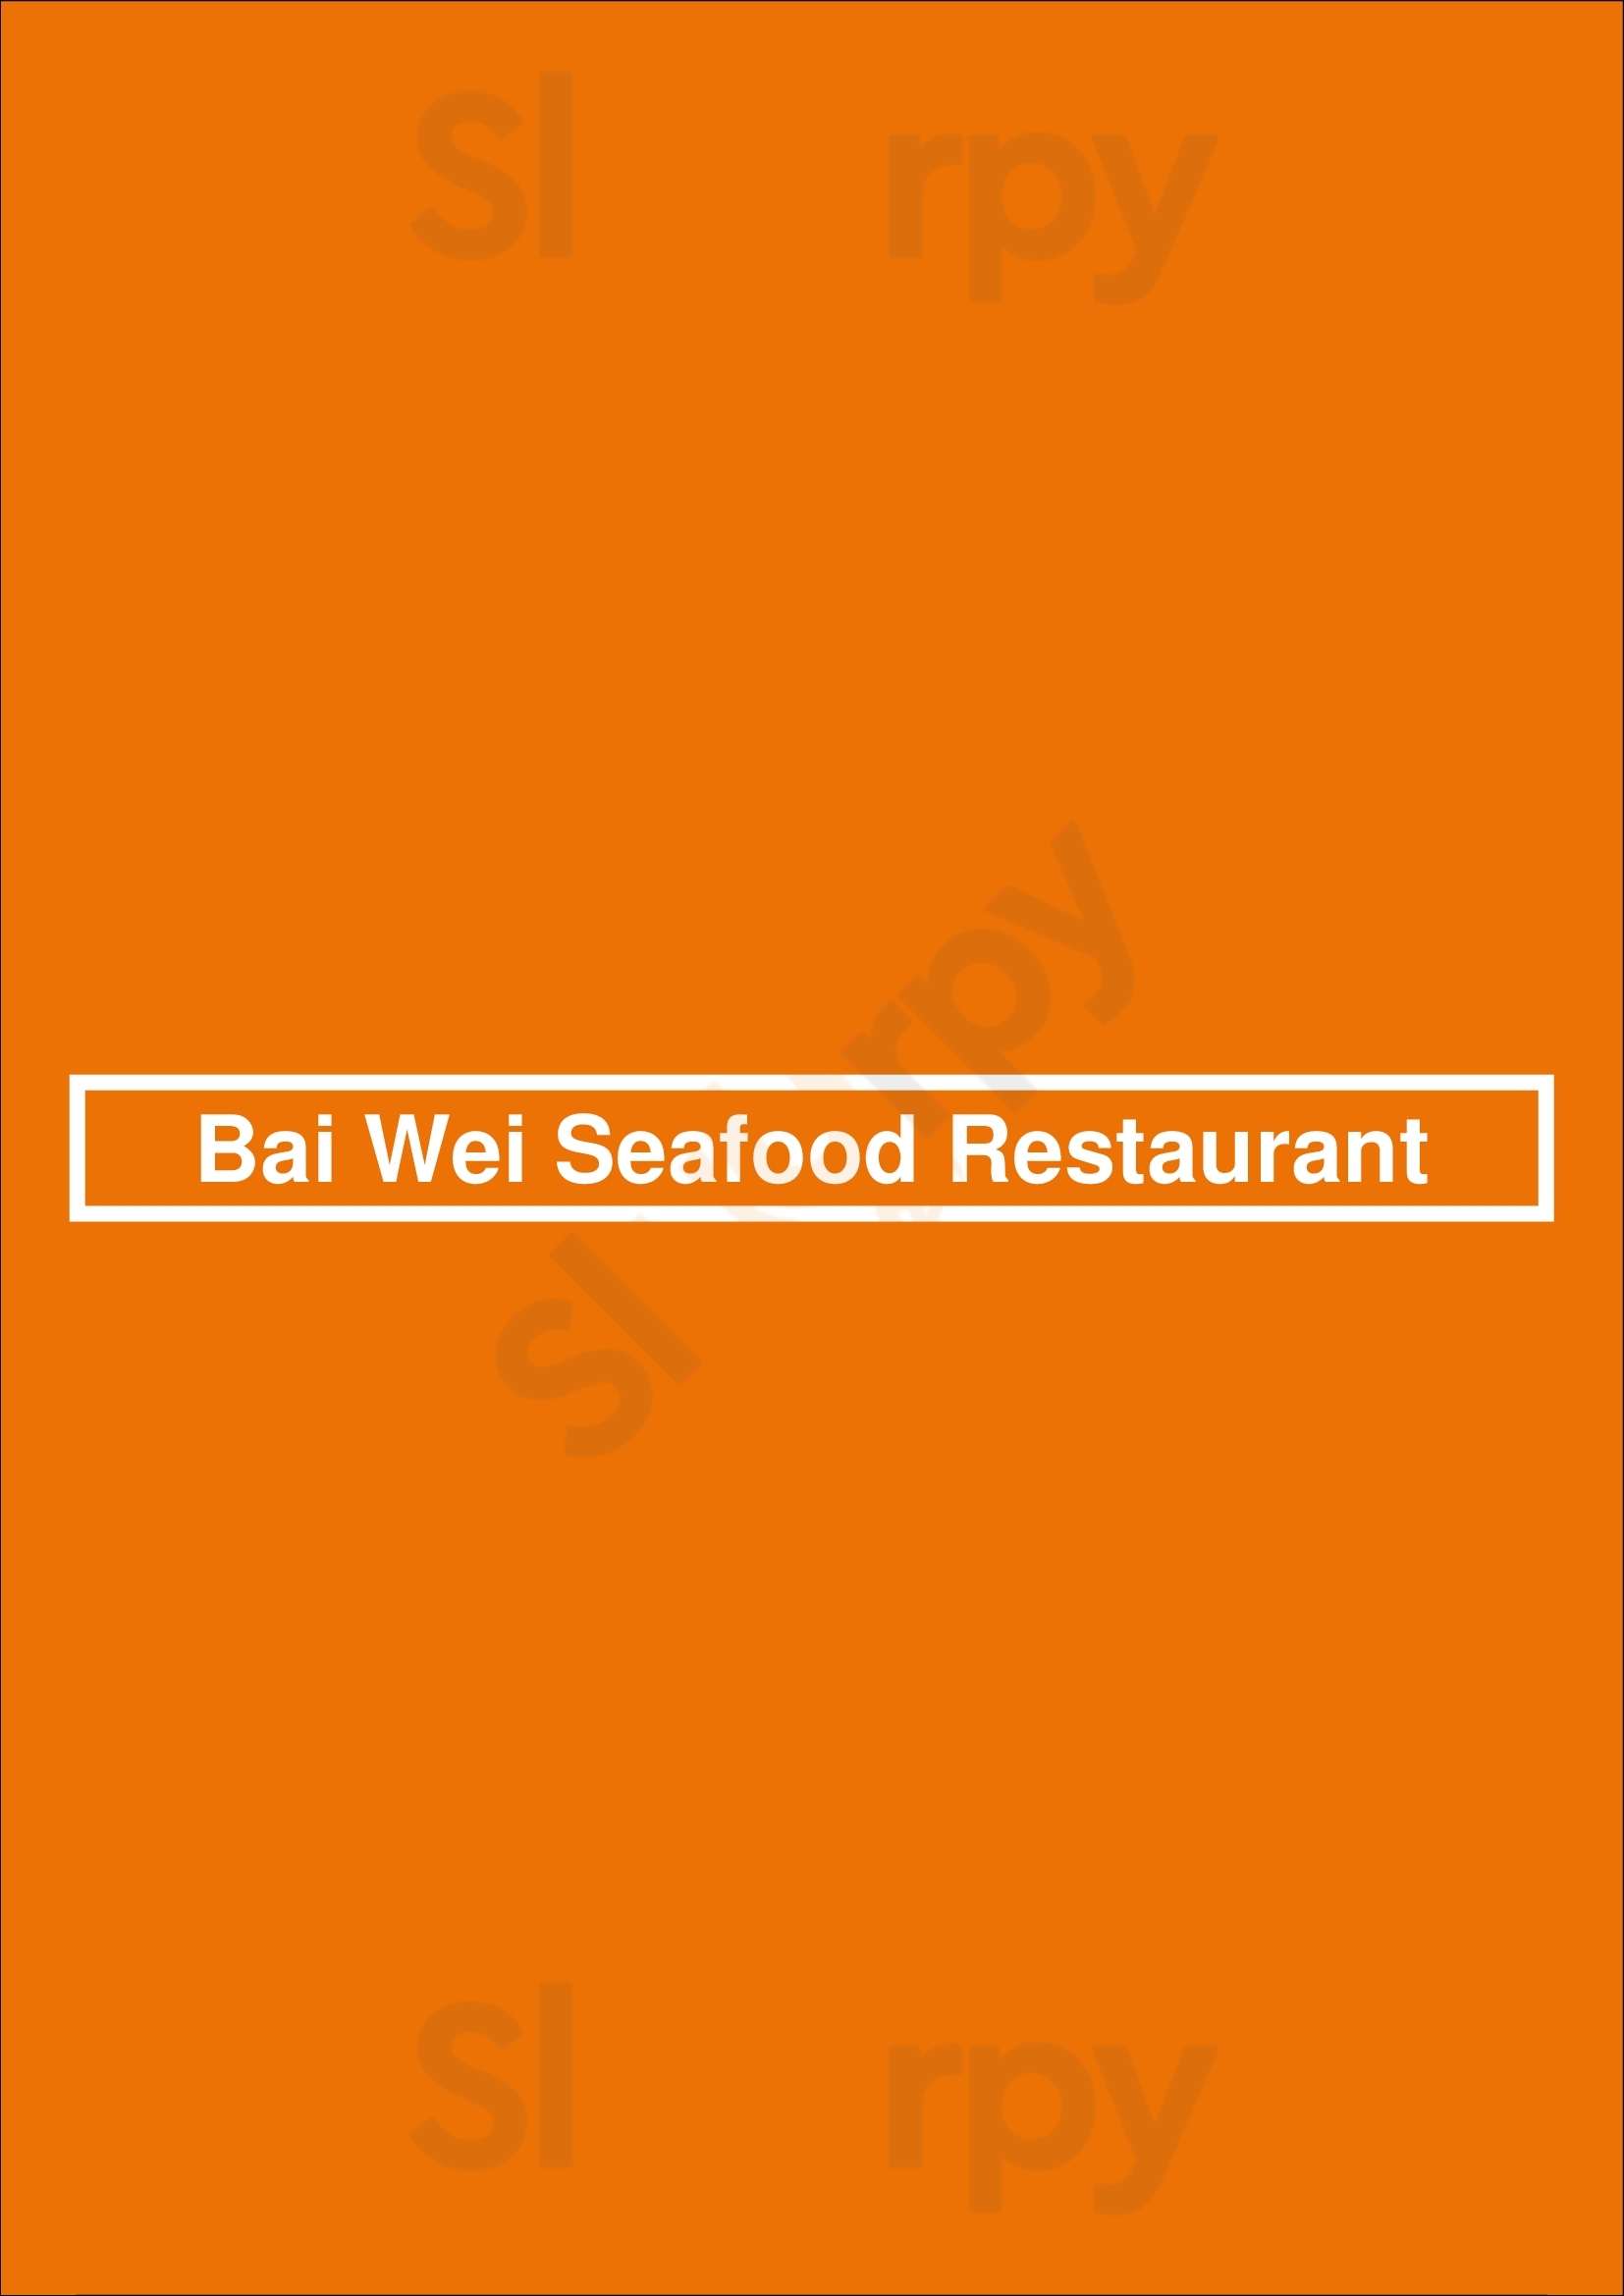 Bai Wei Seafood Restaurant Edmonton Menu - 1